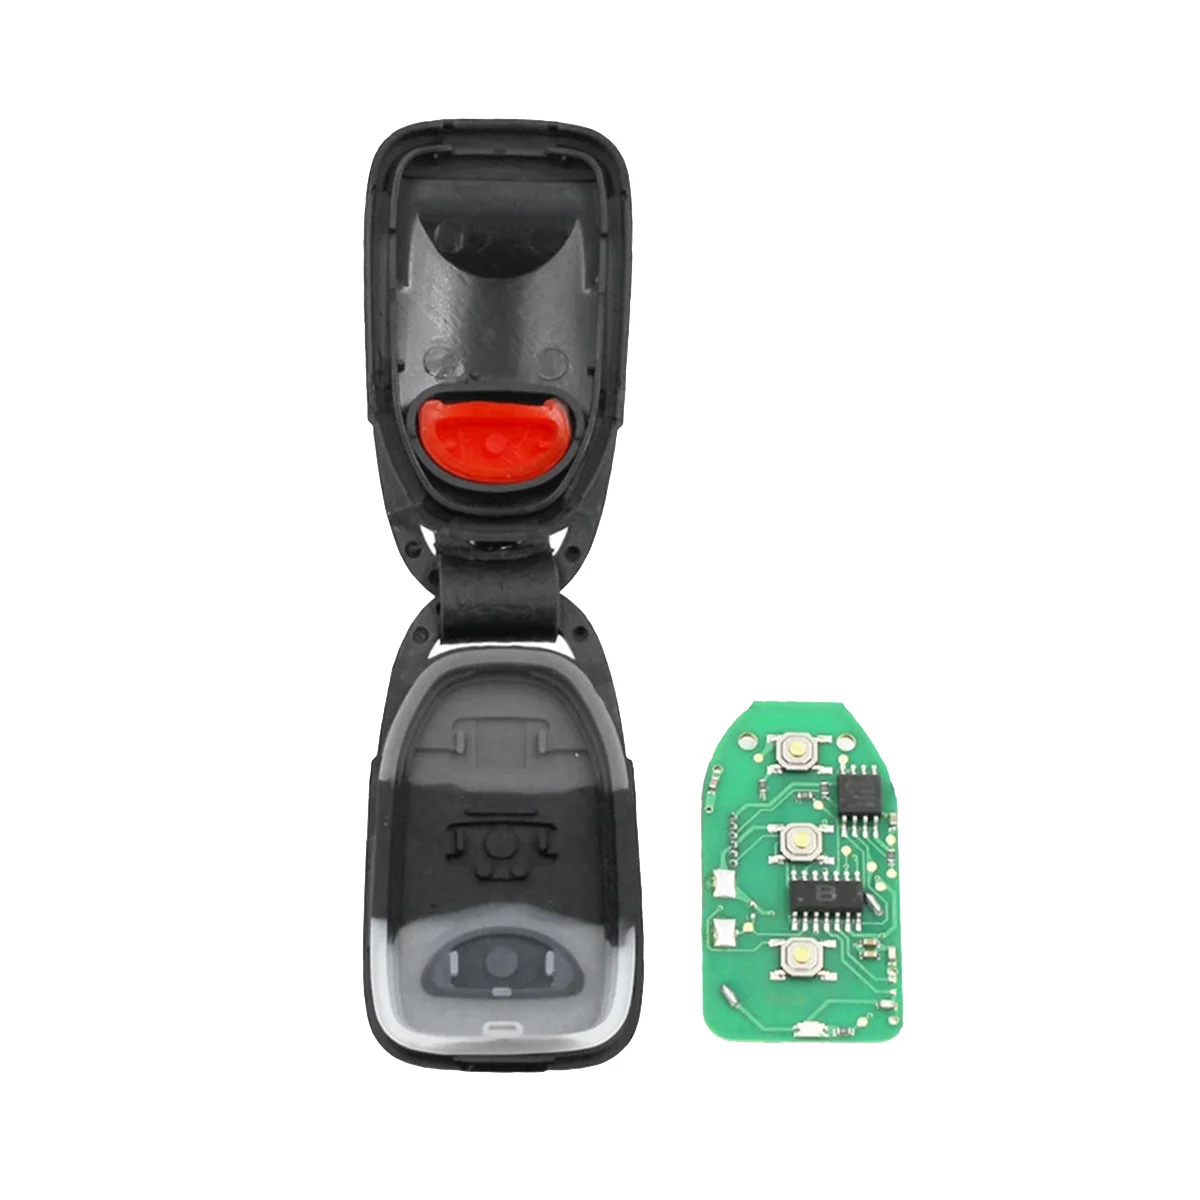 

KEYDIY B09-3+1 KD Remote Control Car Key Universal 4 Button for Hyundai KIA for KD900/KD-X2 KD MINI/ URG200 Programmer